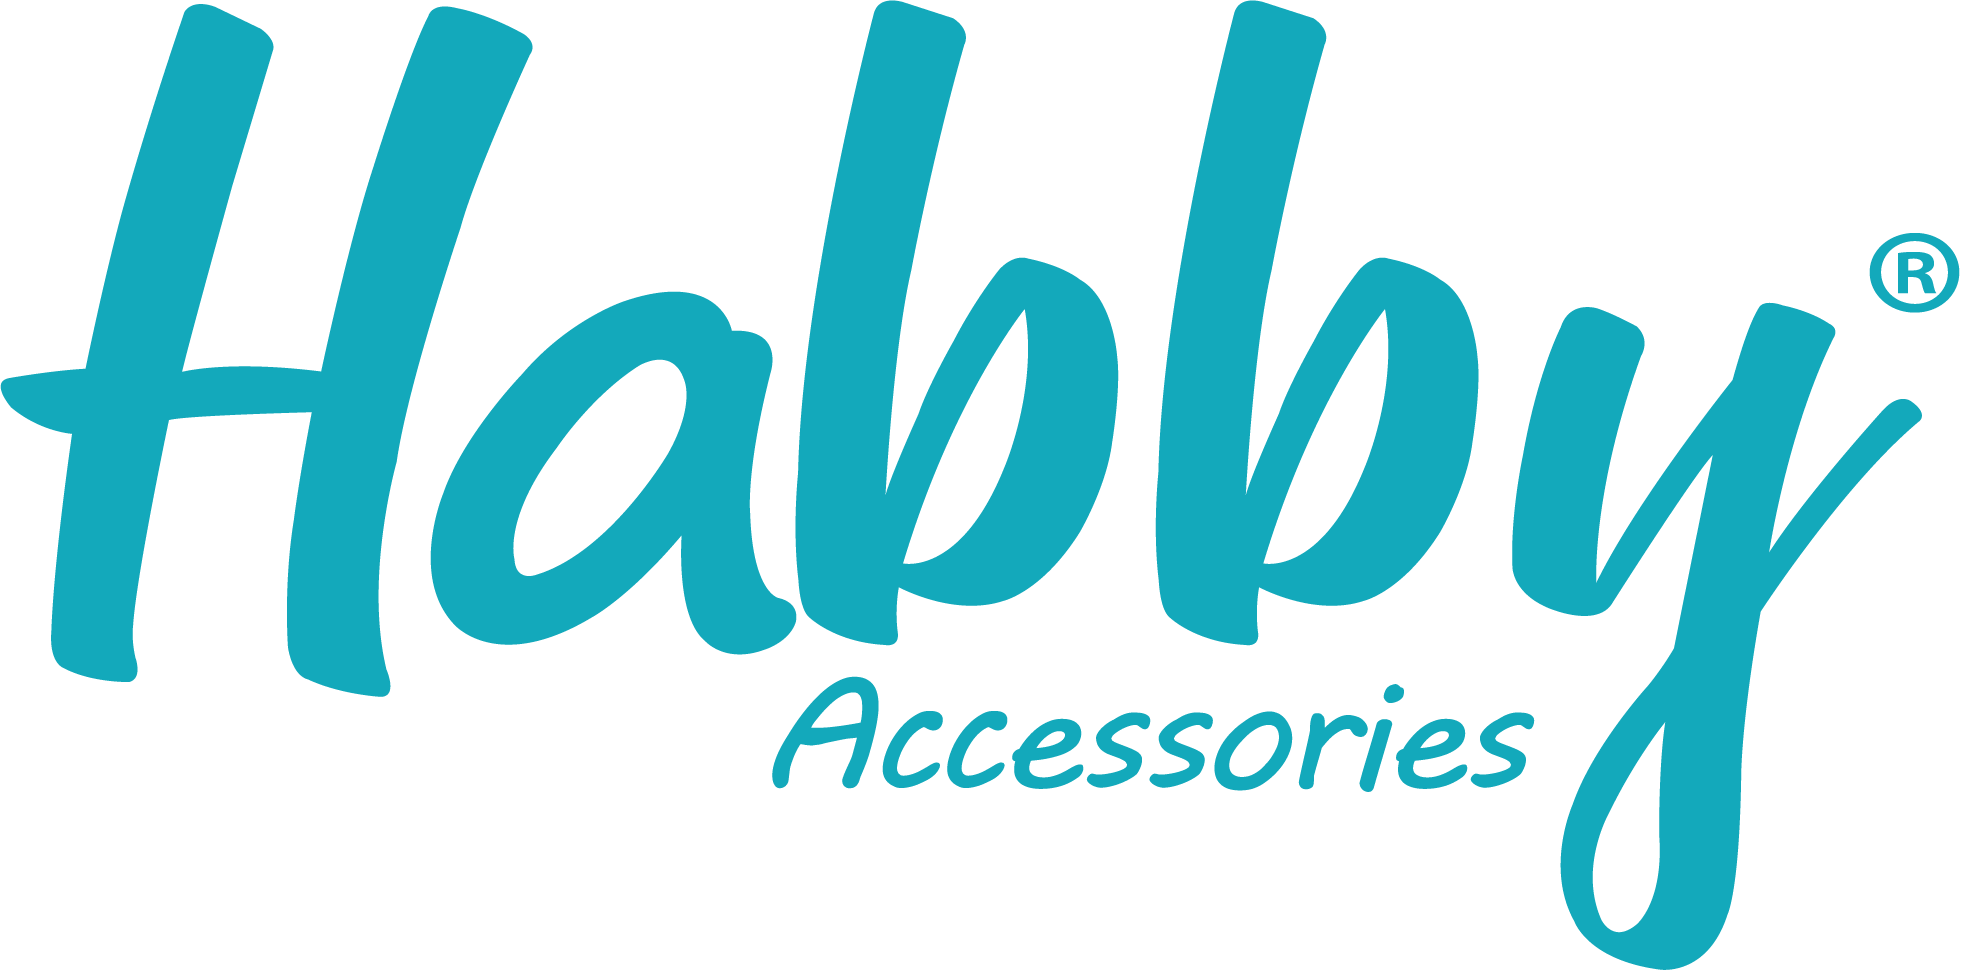 Habby Accessories Logo